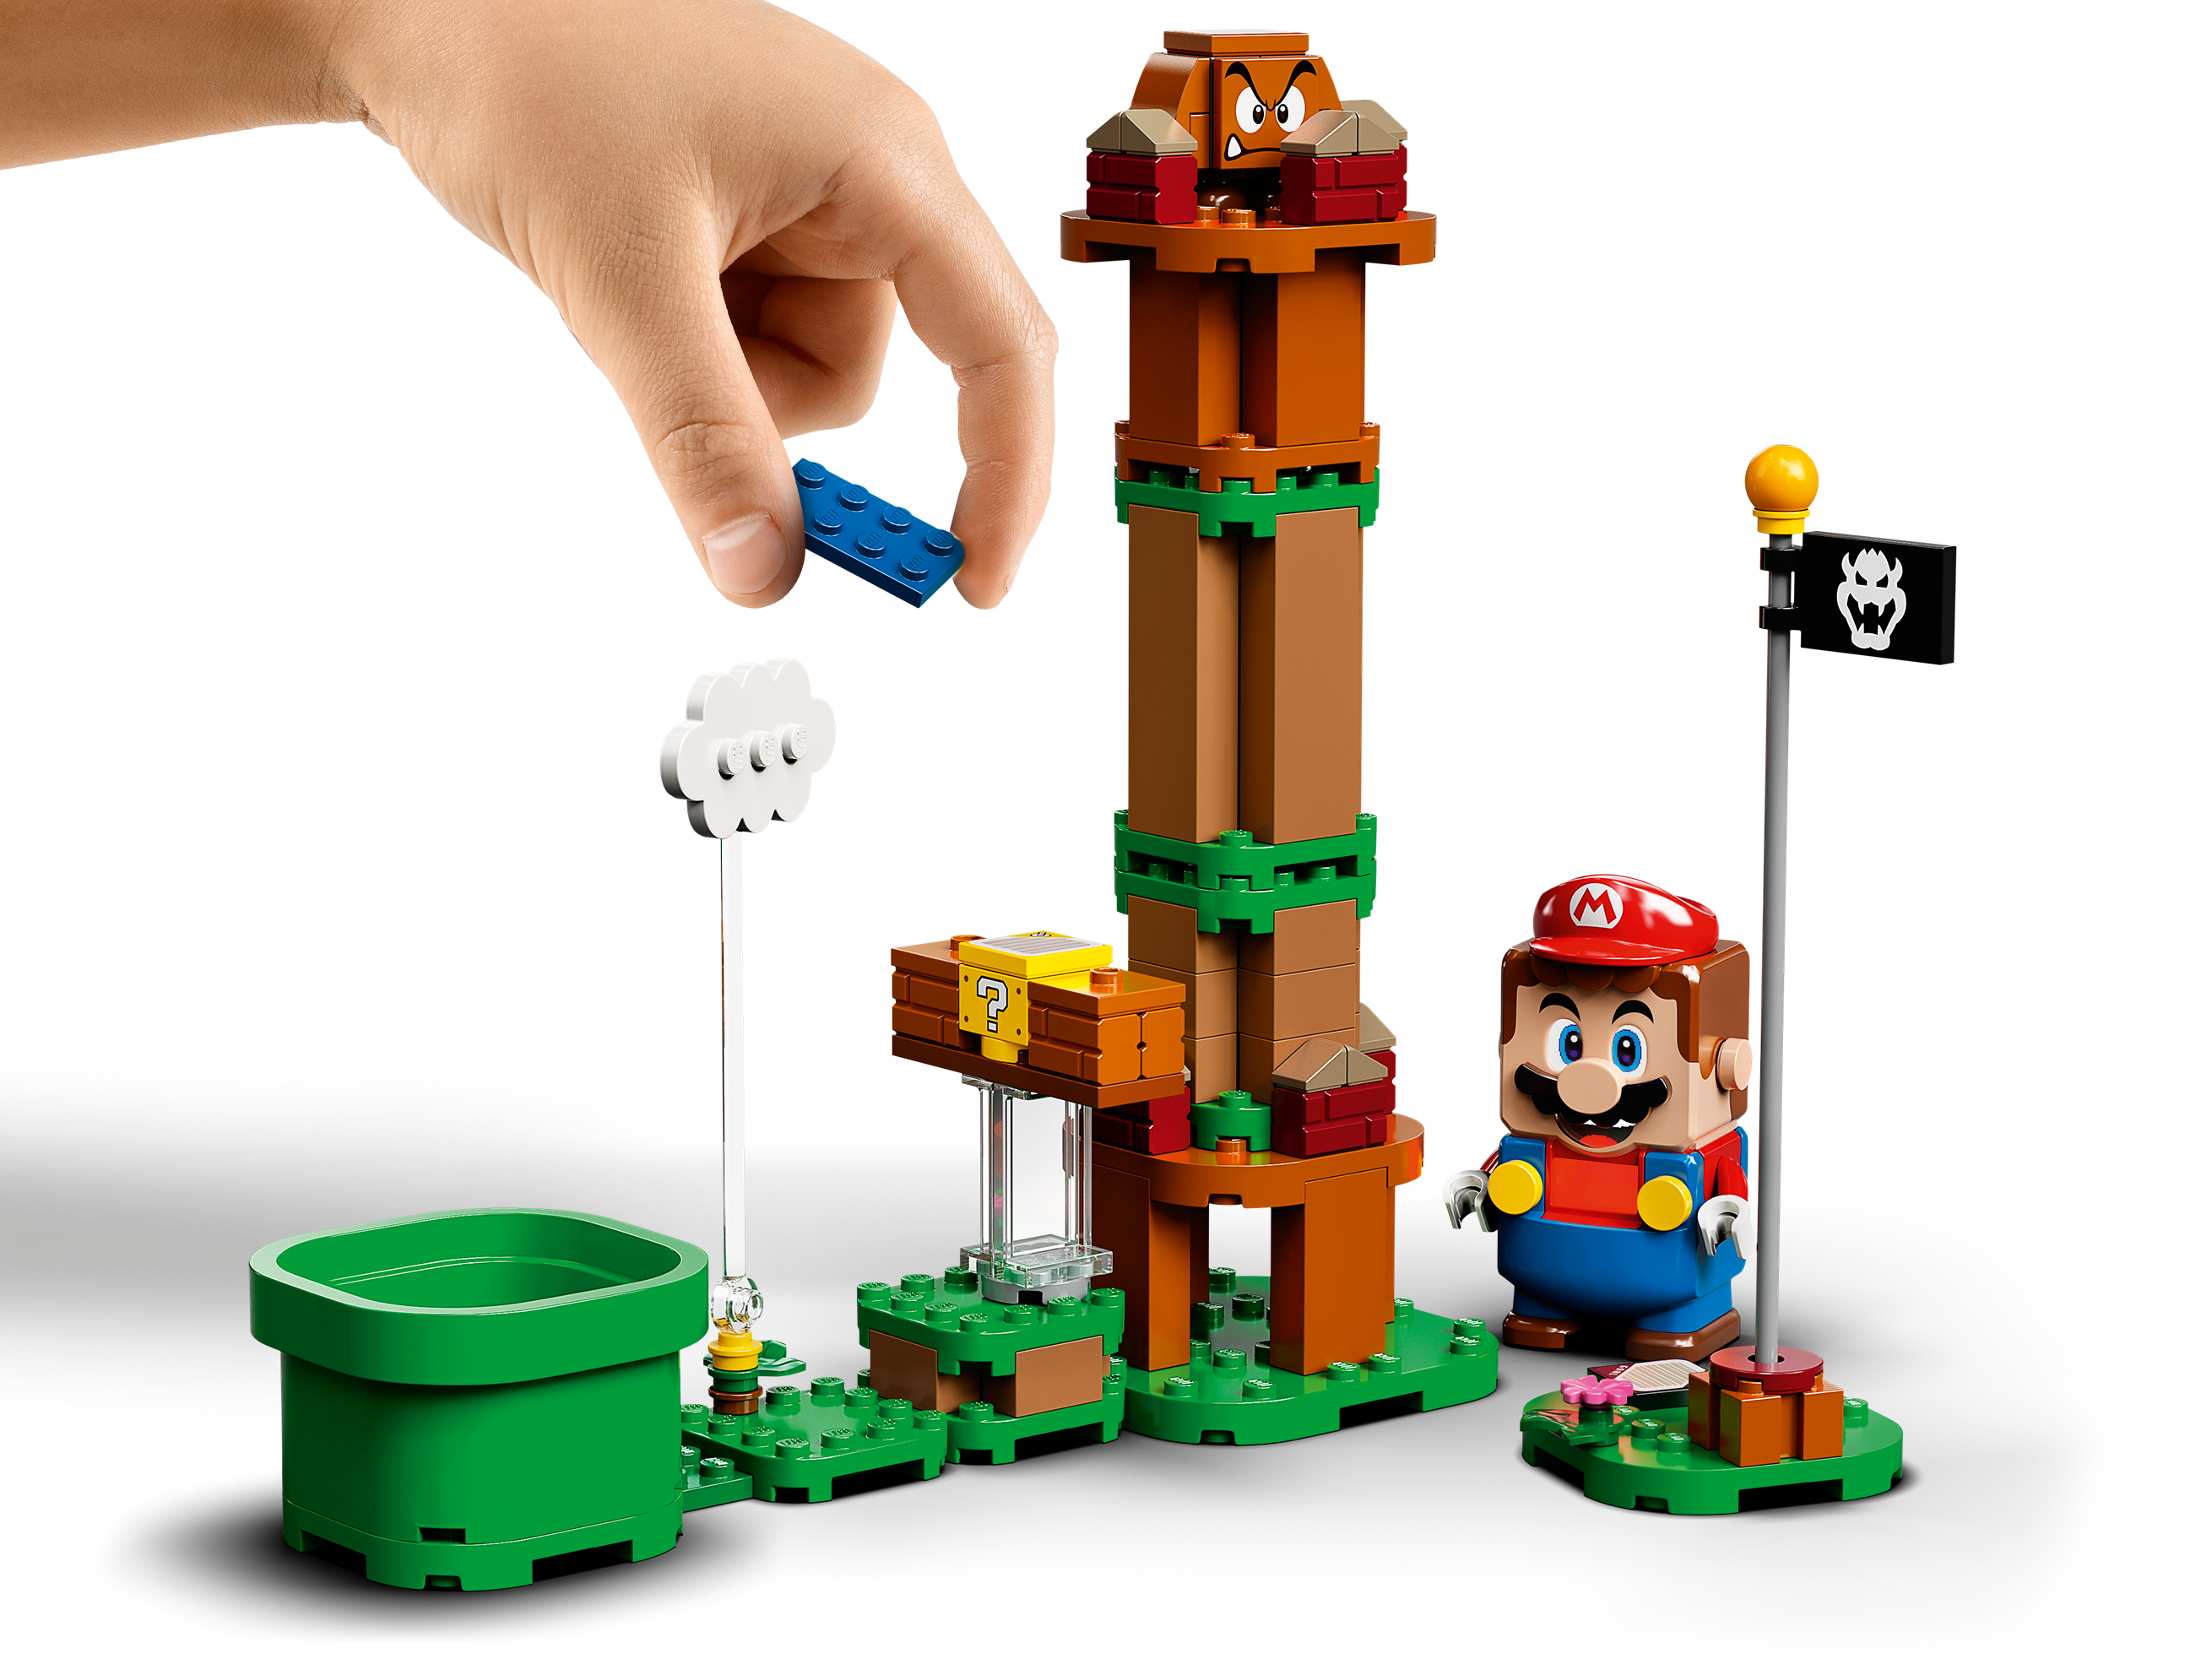 Adventures with Mario Starter Course 71360